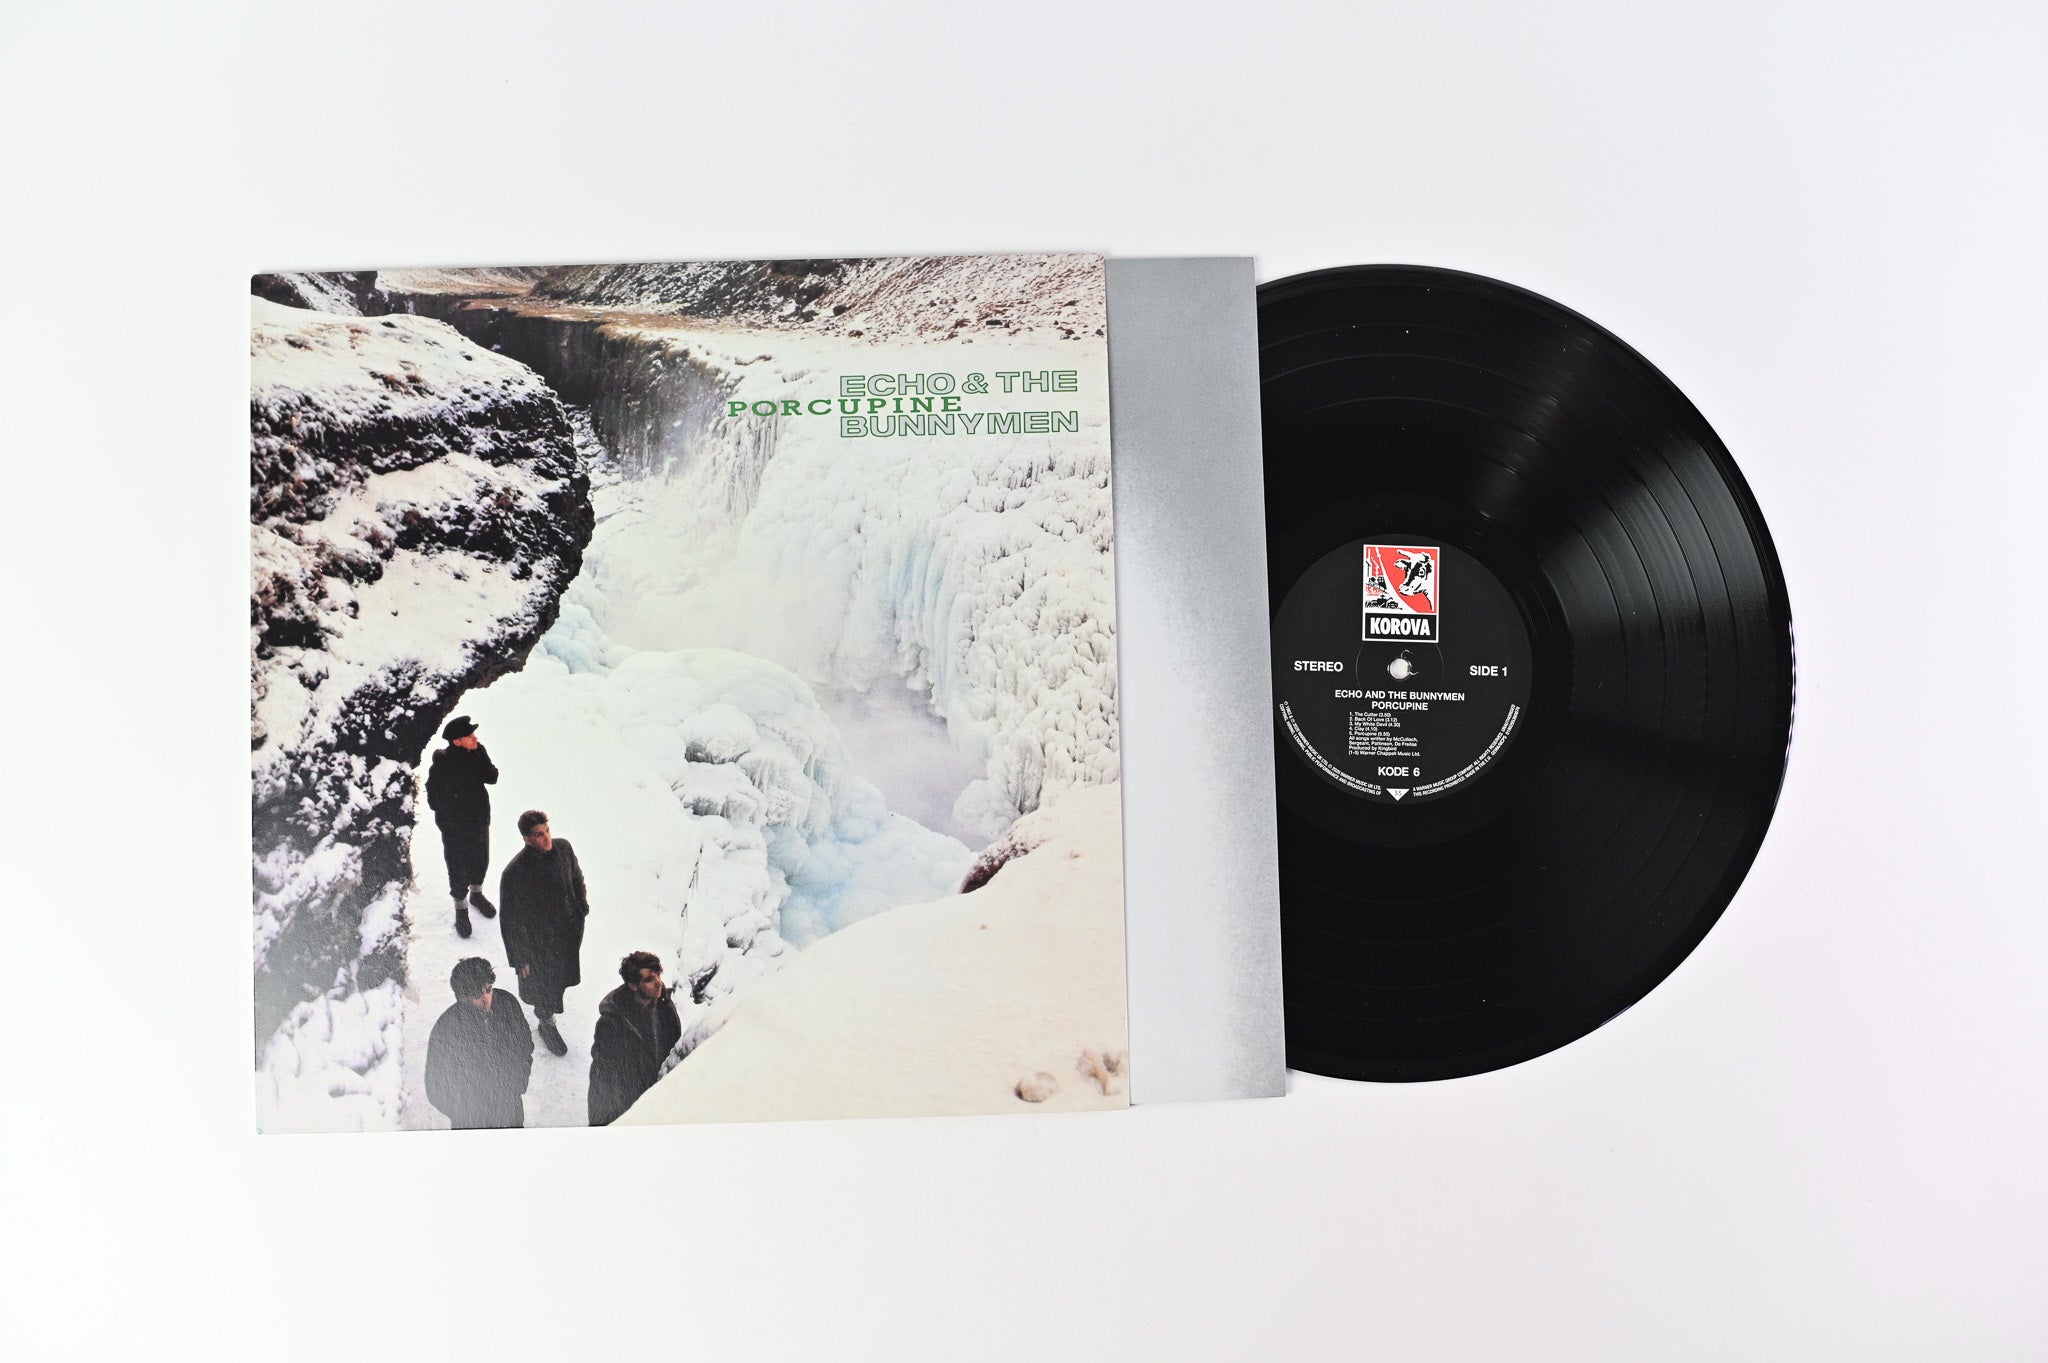 Echo & The Bunnymen - Porcupine on Korova Reissue